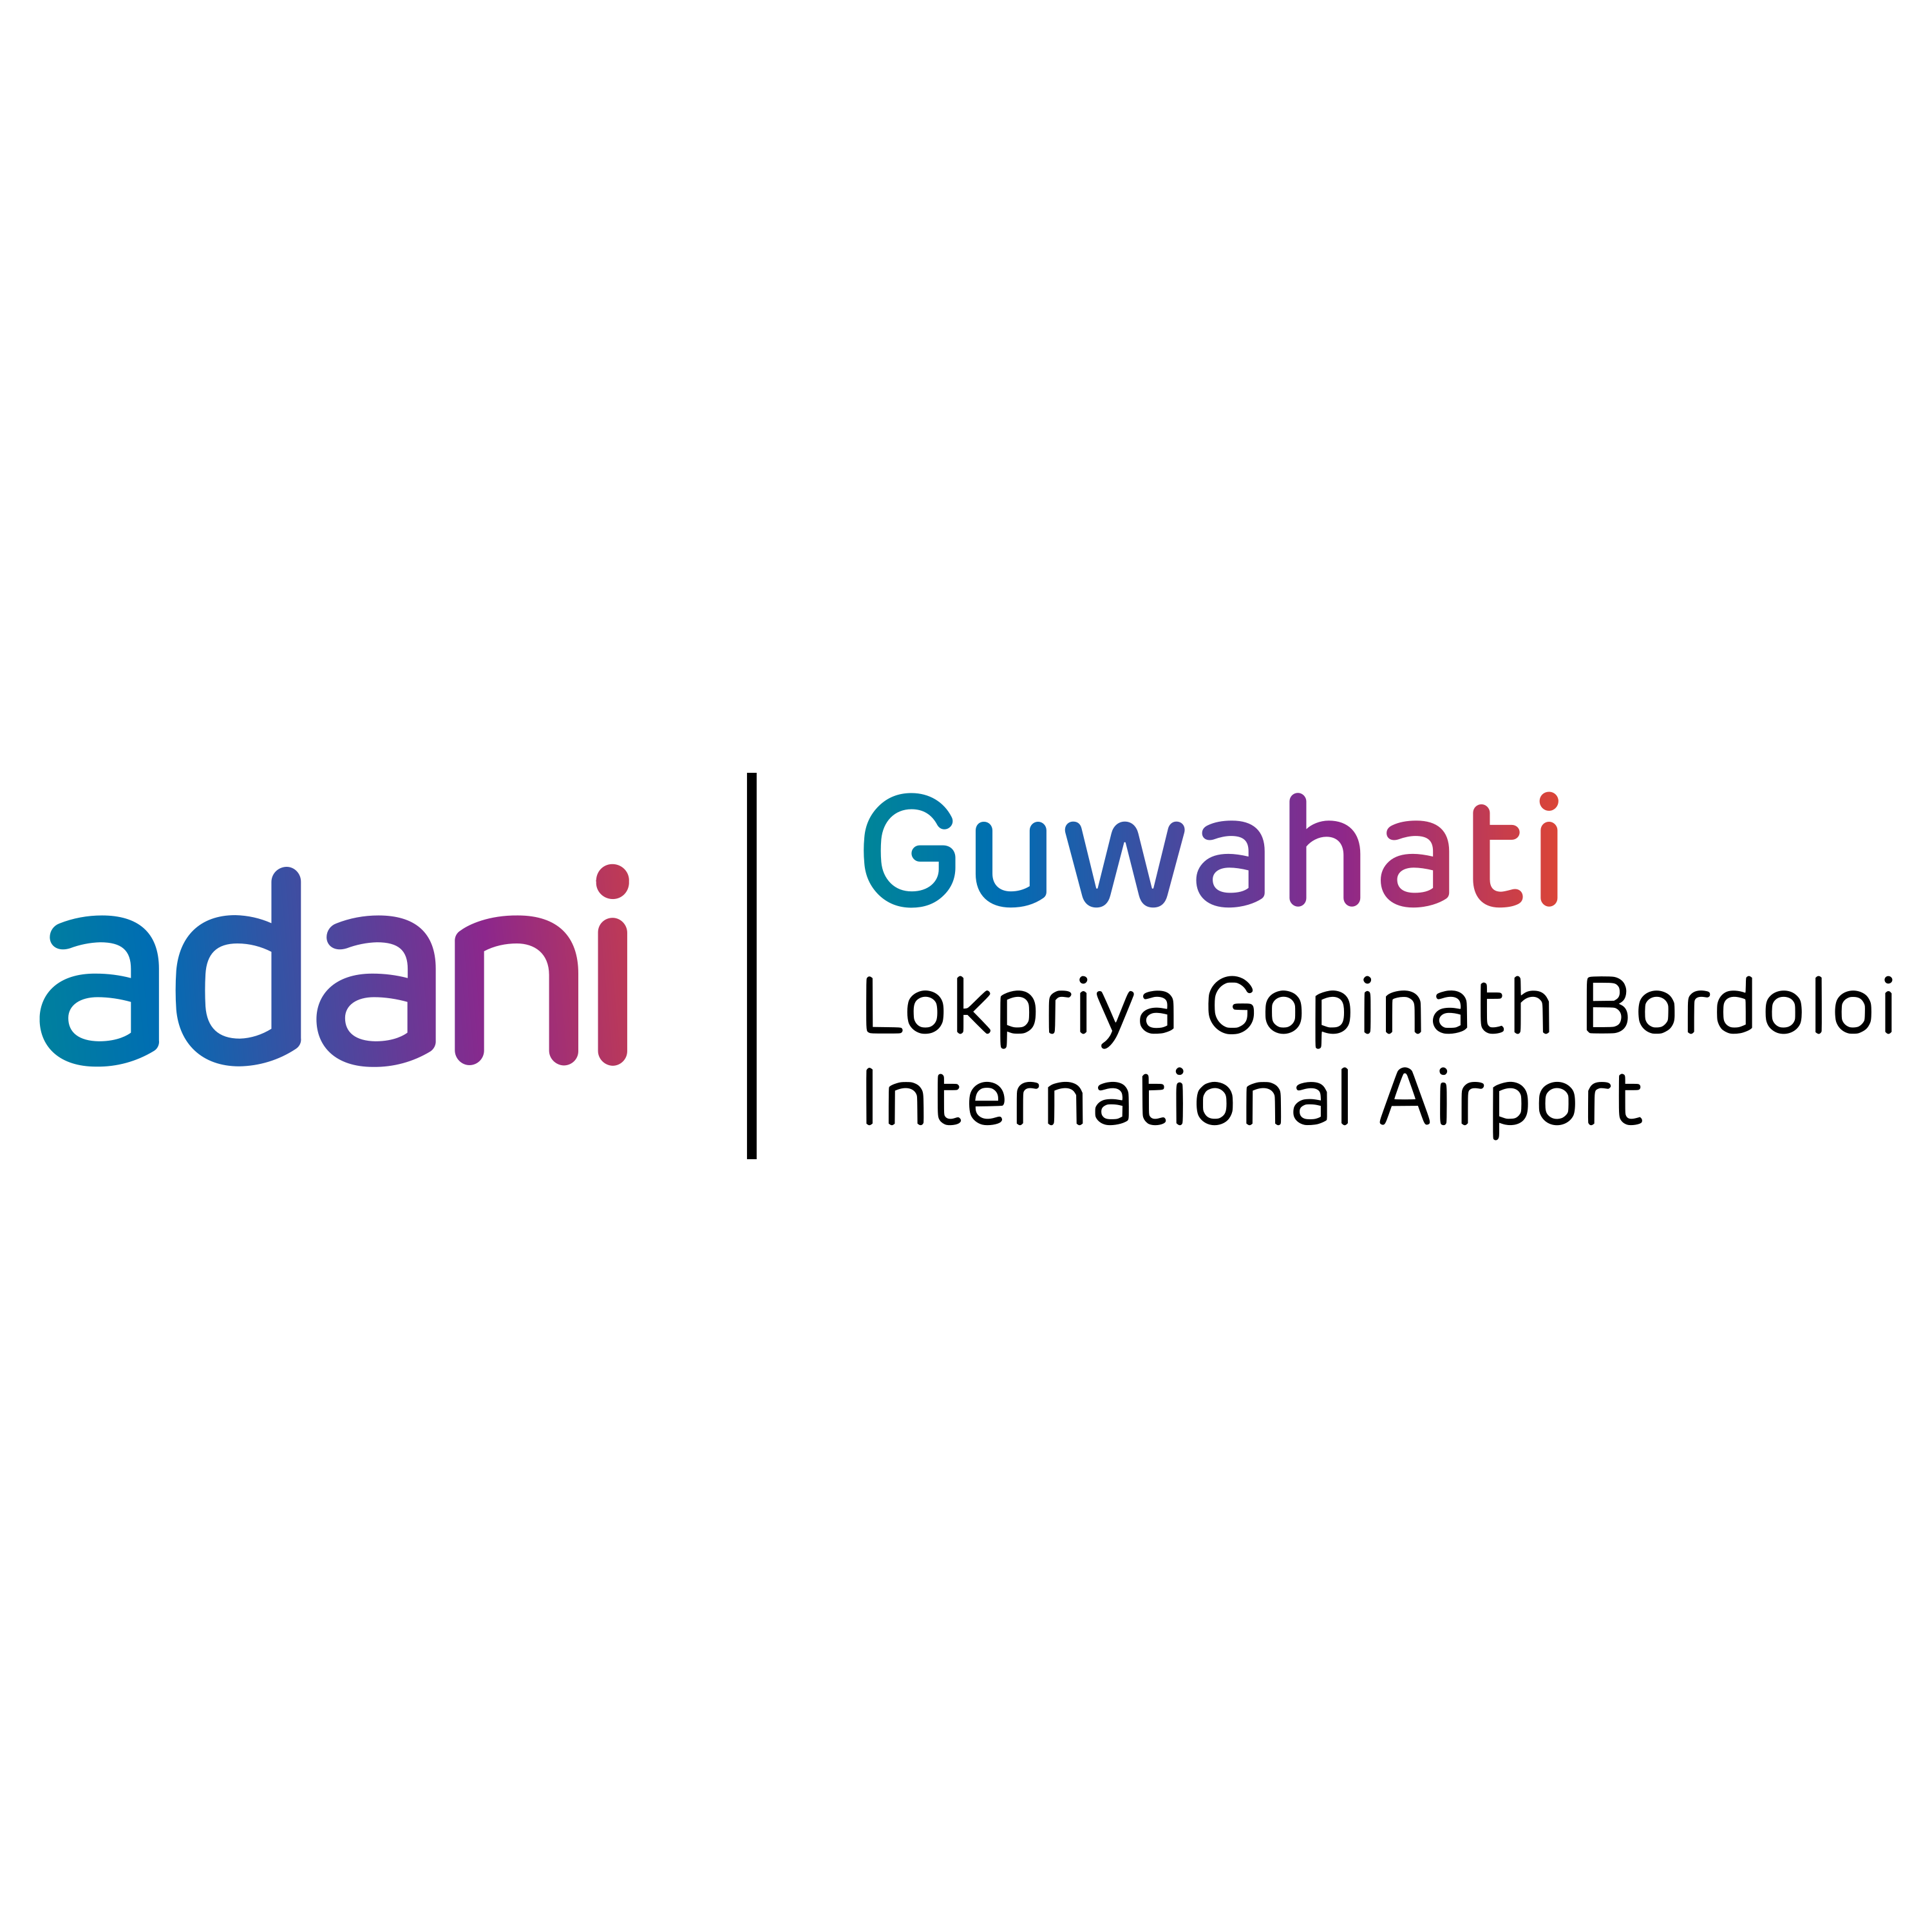 Guwahati Airport Logo Transparent Image